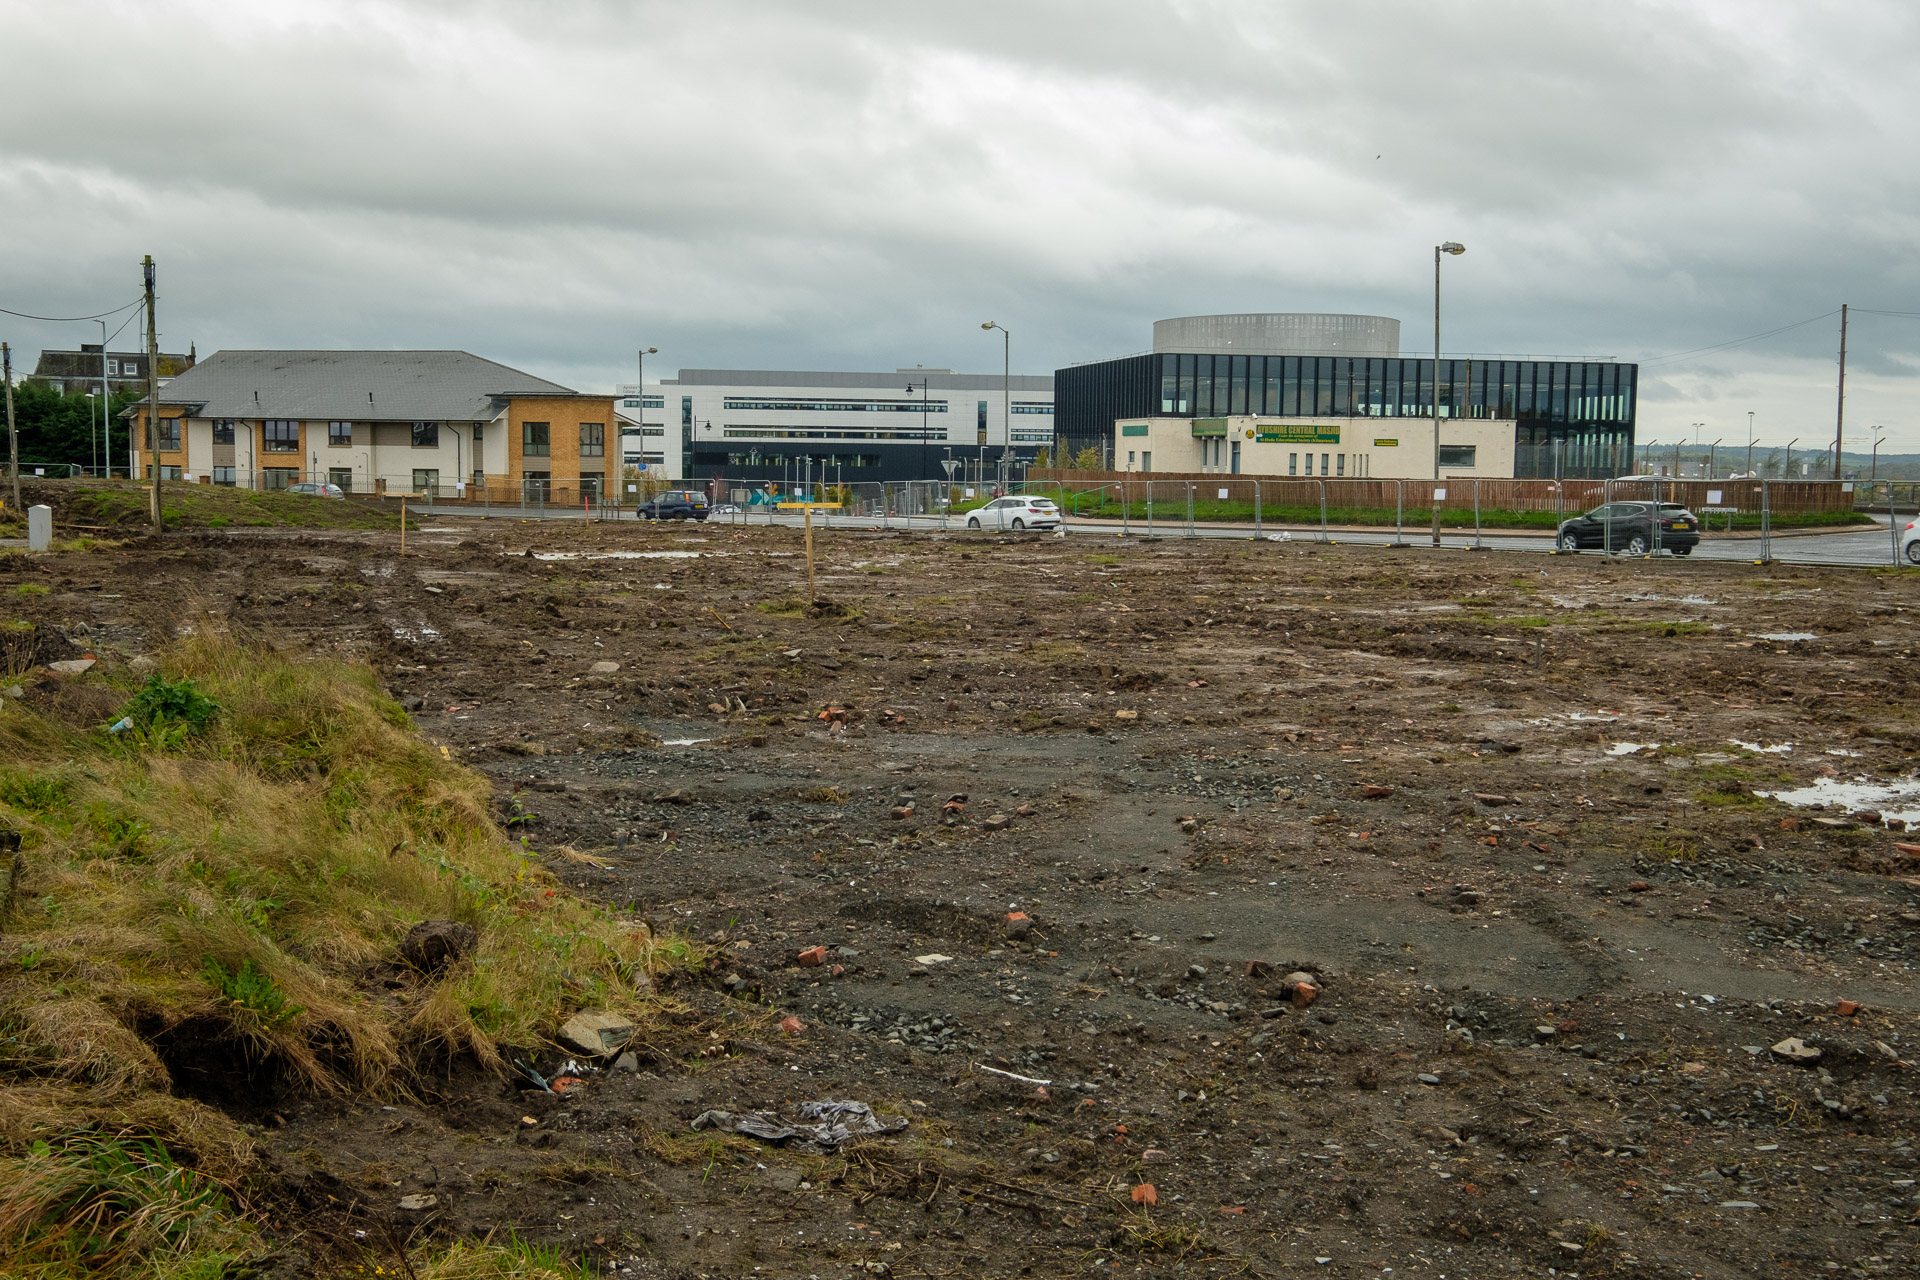 Work starts on new council housing development in Kilmarnock